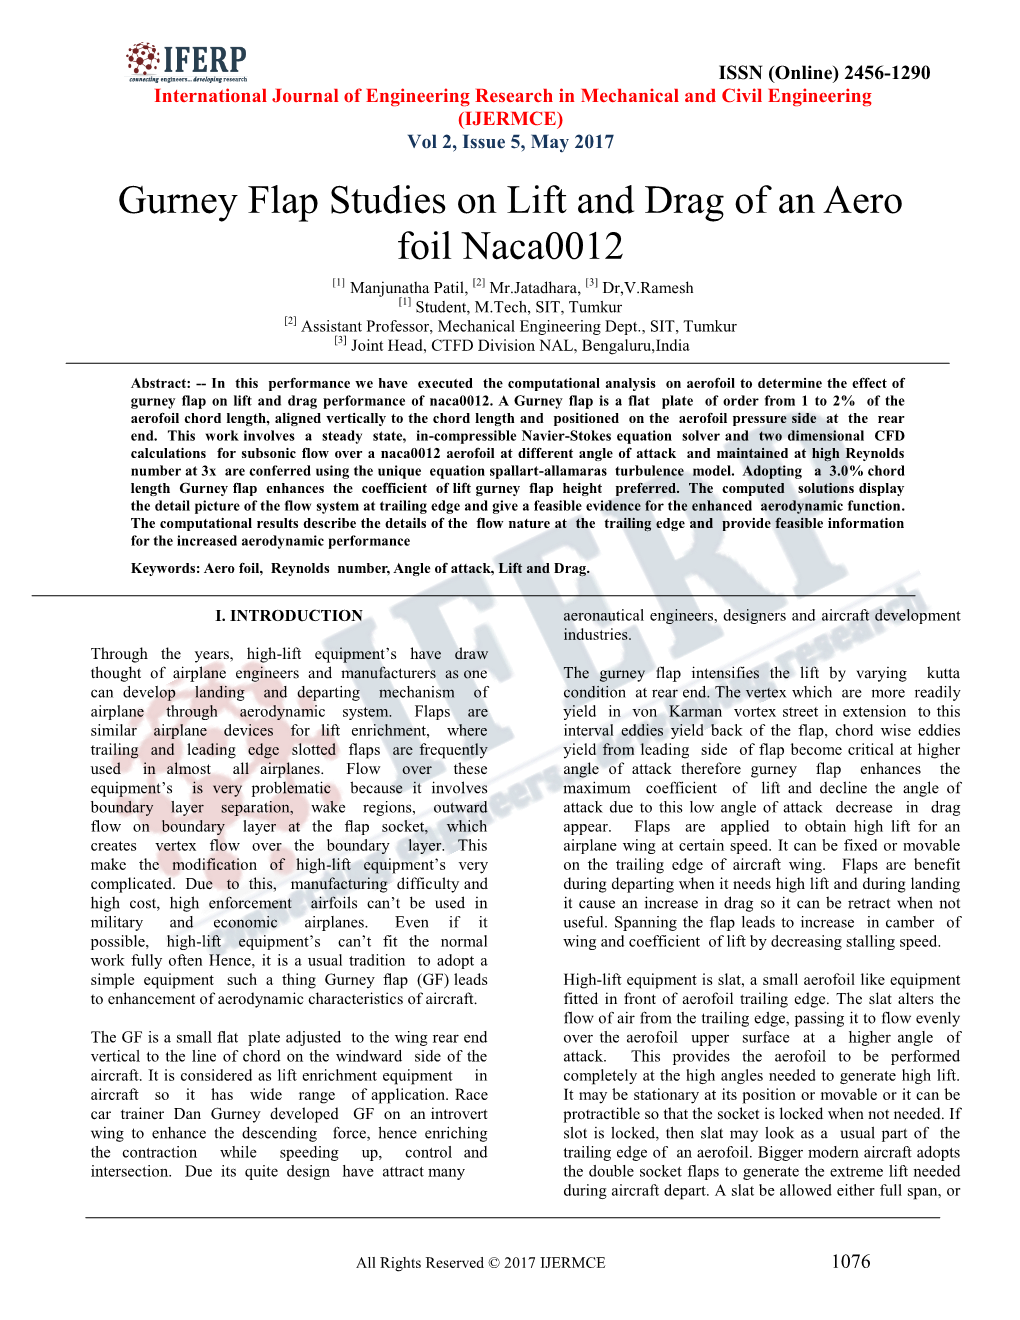 Gurney Flap Studies on Lift and Drag of an Aero Foil Naca0012